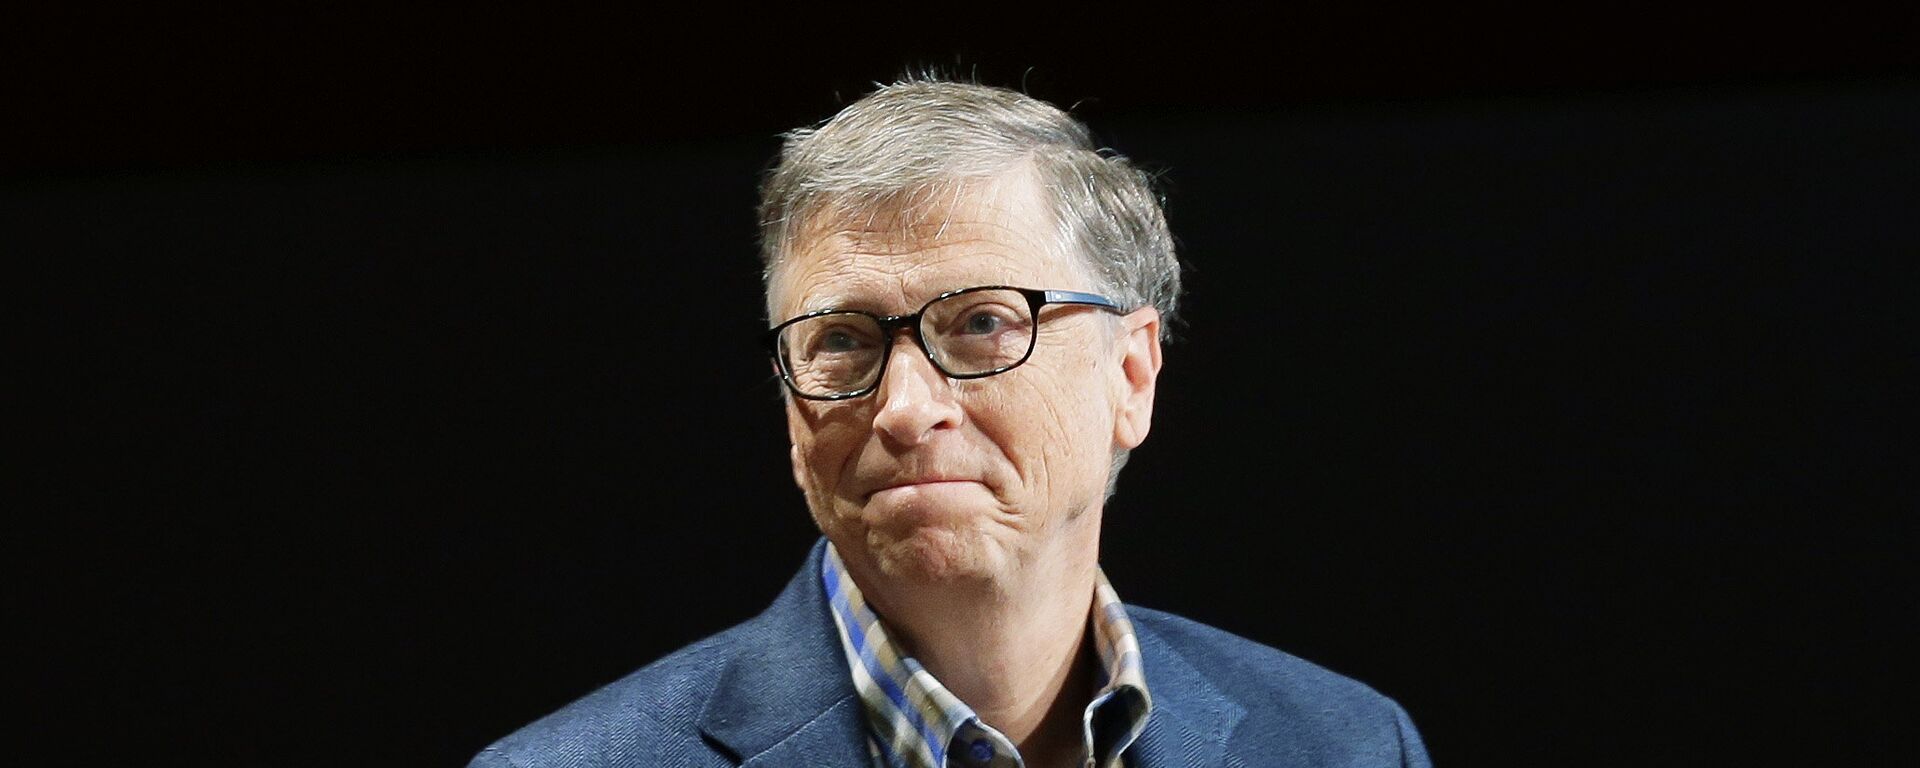 Bill Gates, cofundador de Microsoft  - Sputnik Mundo, 1920, 27.01.2021